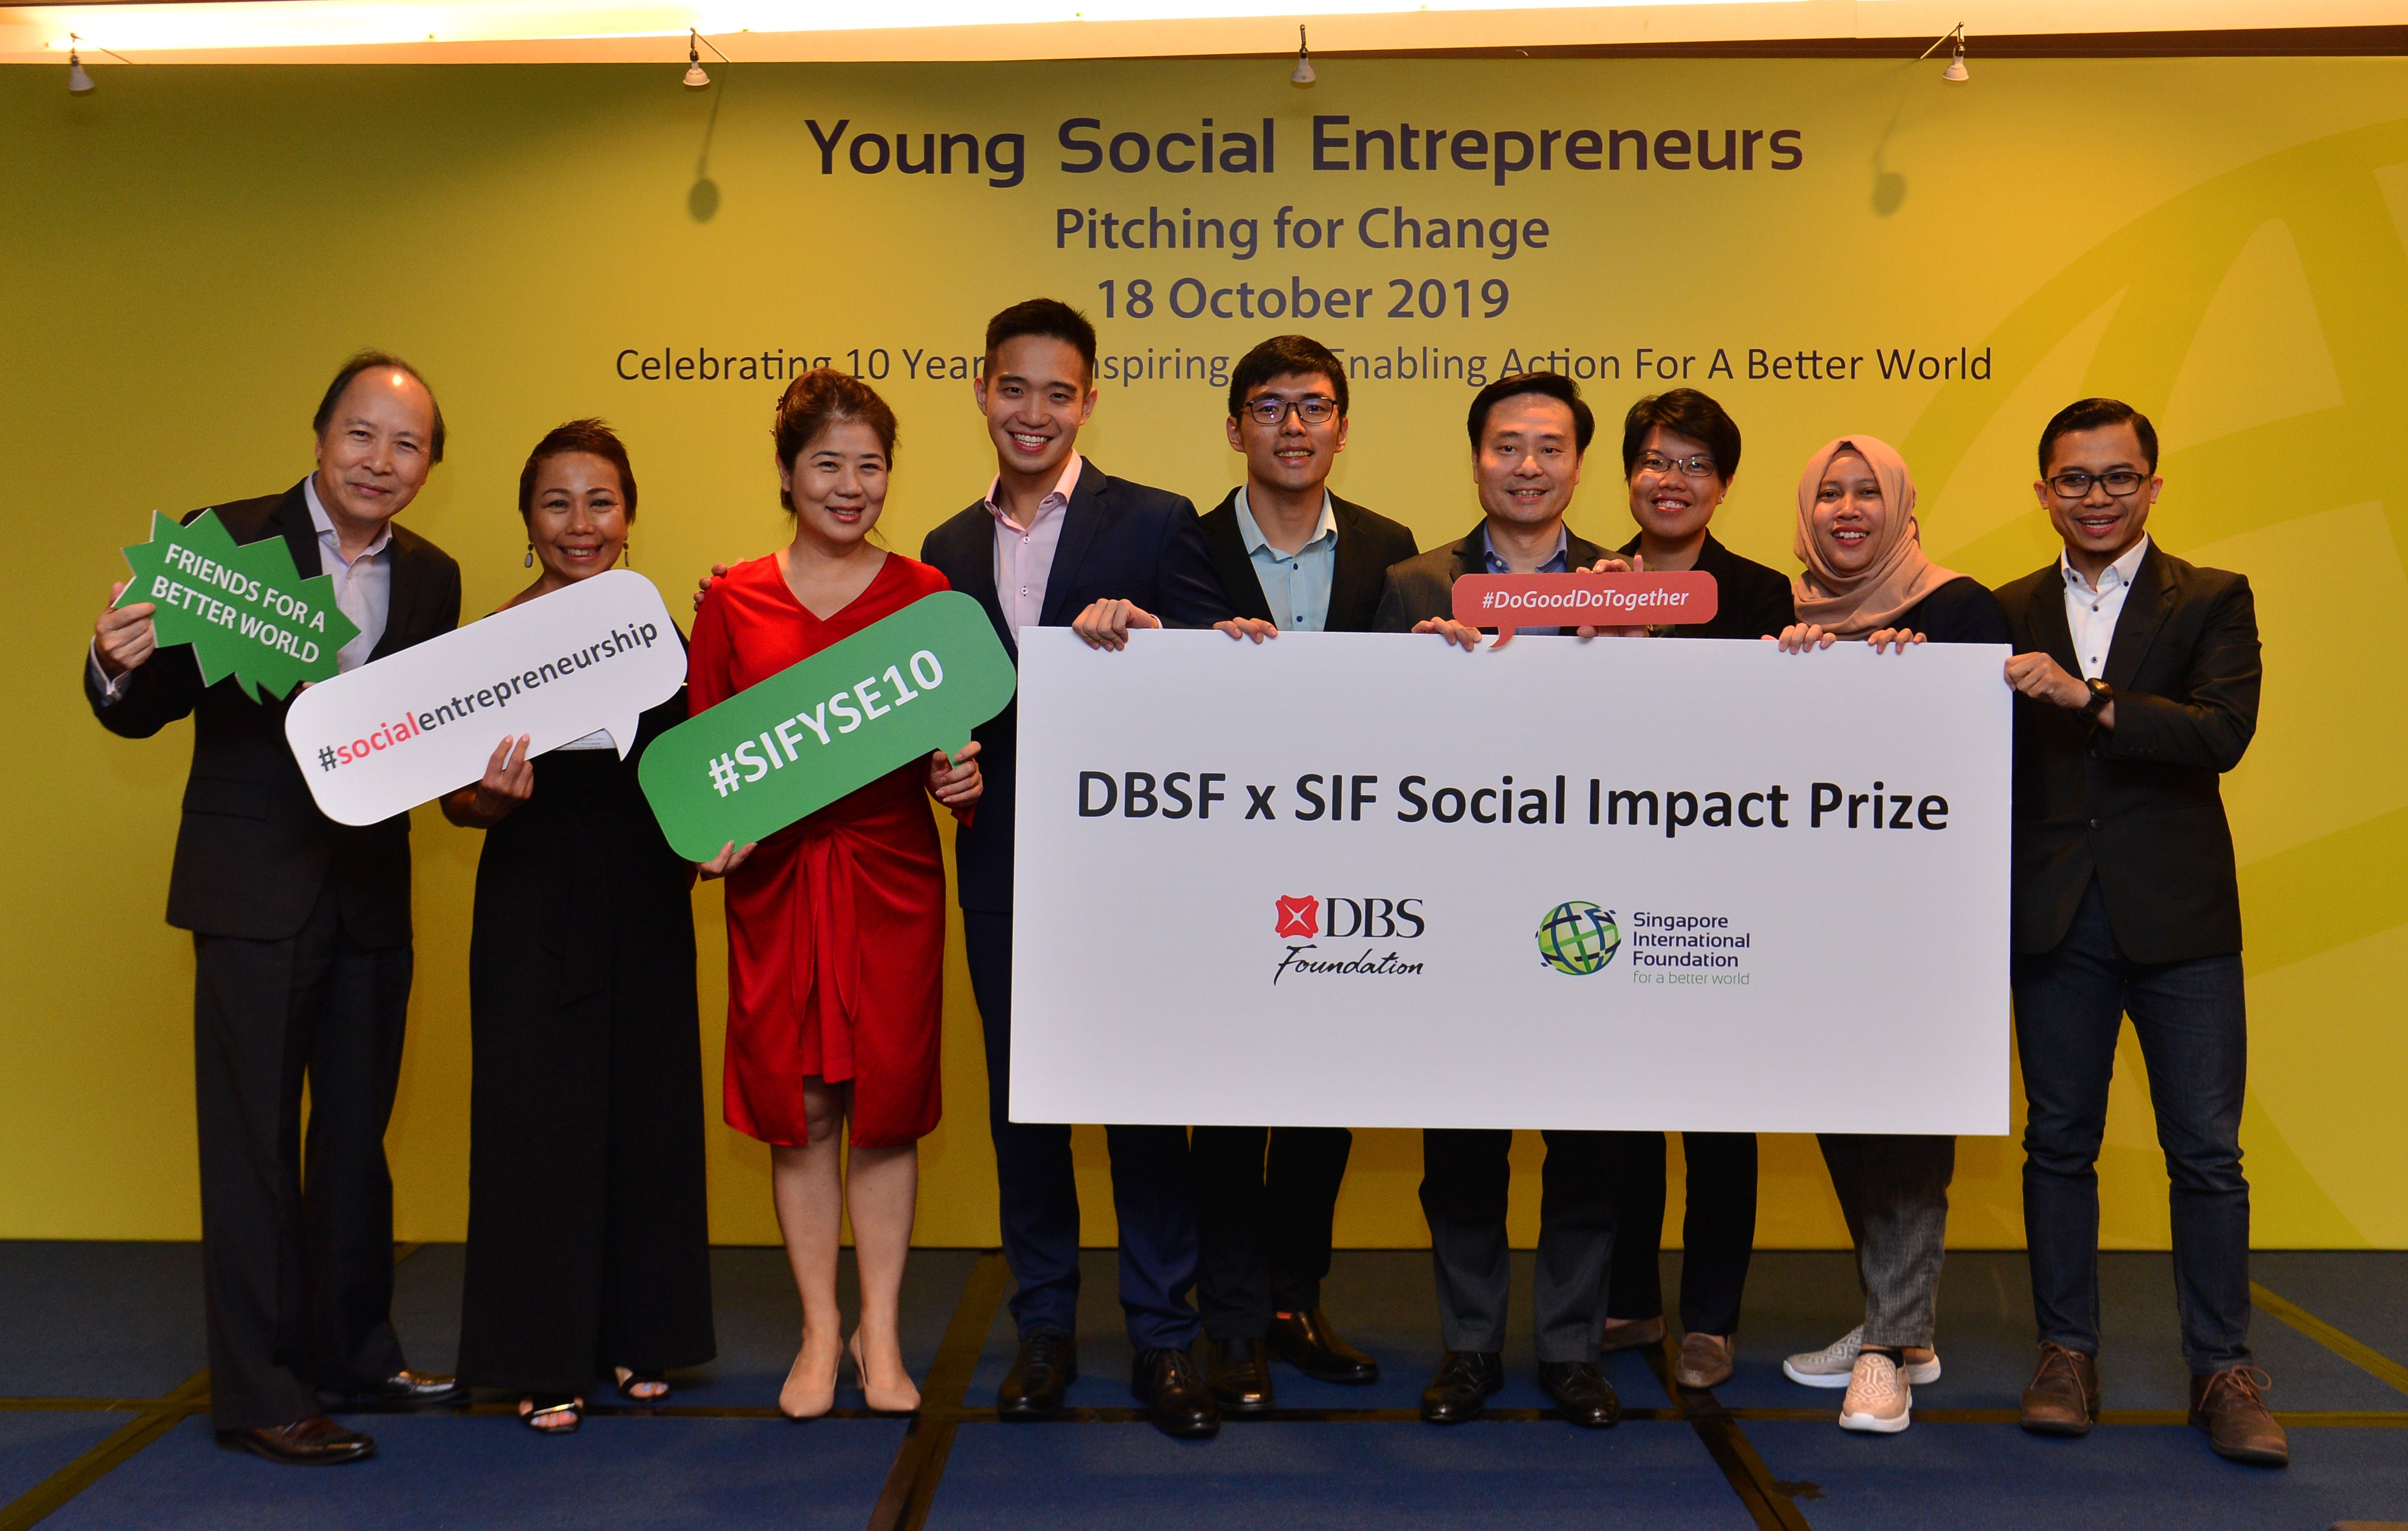 DBSF x SIF Social Impact Prize